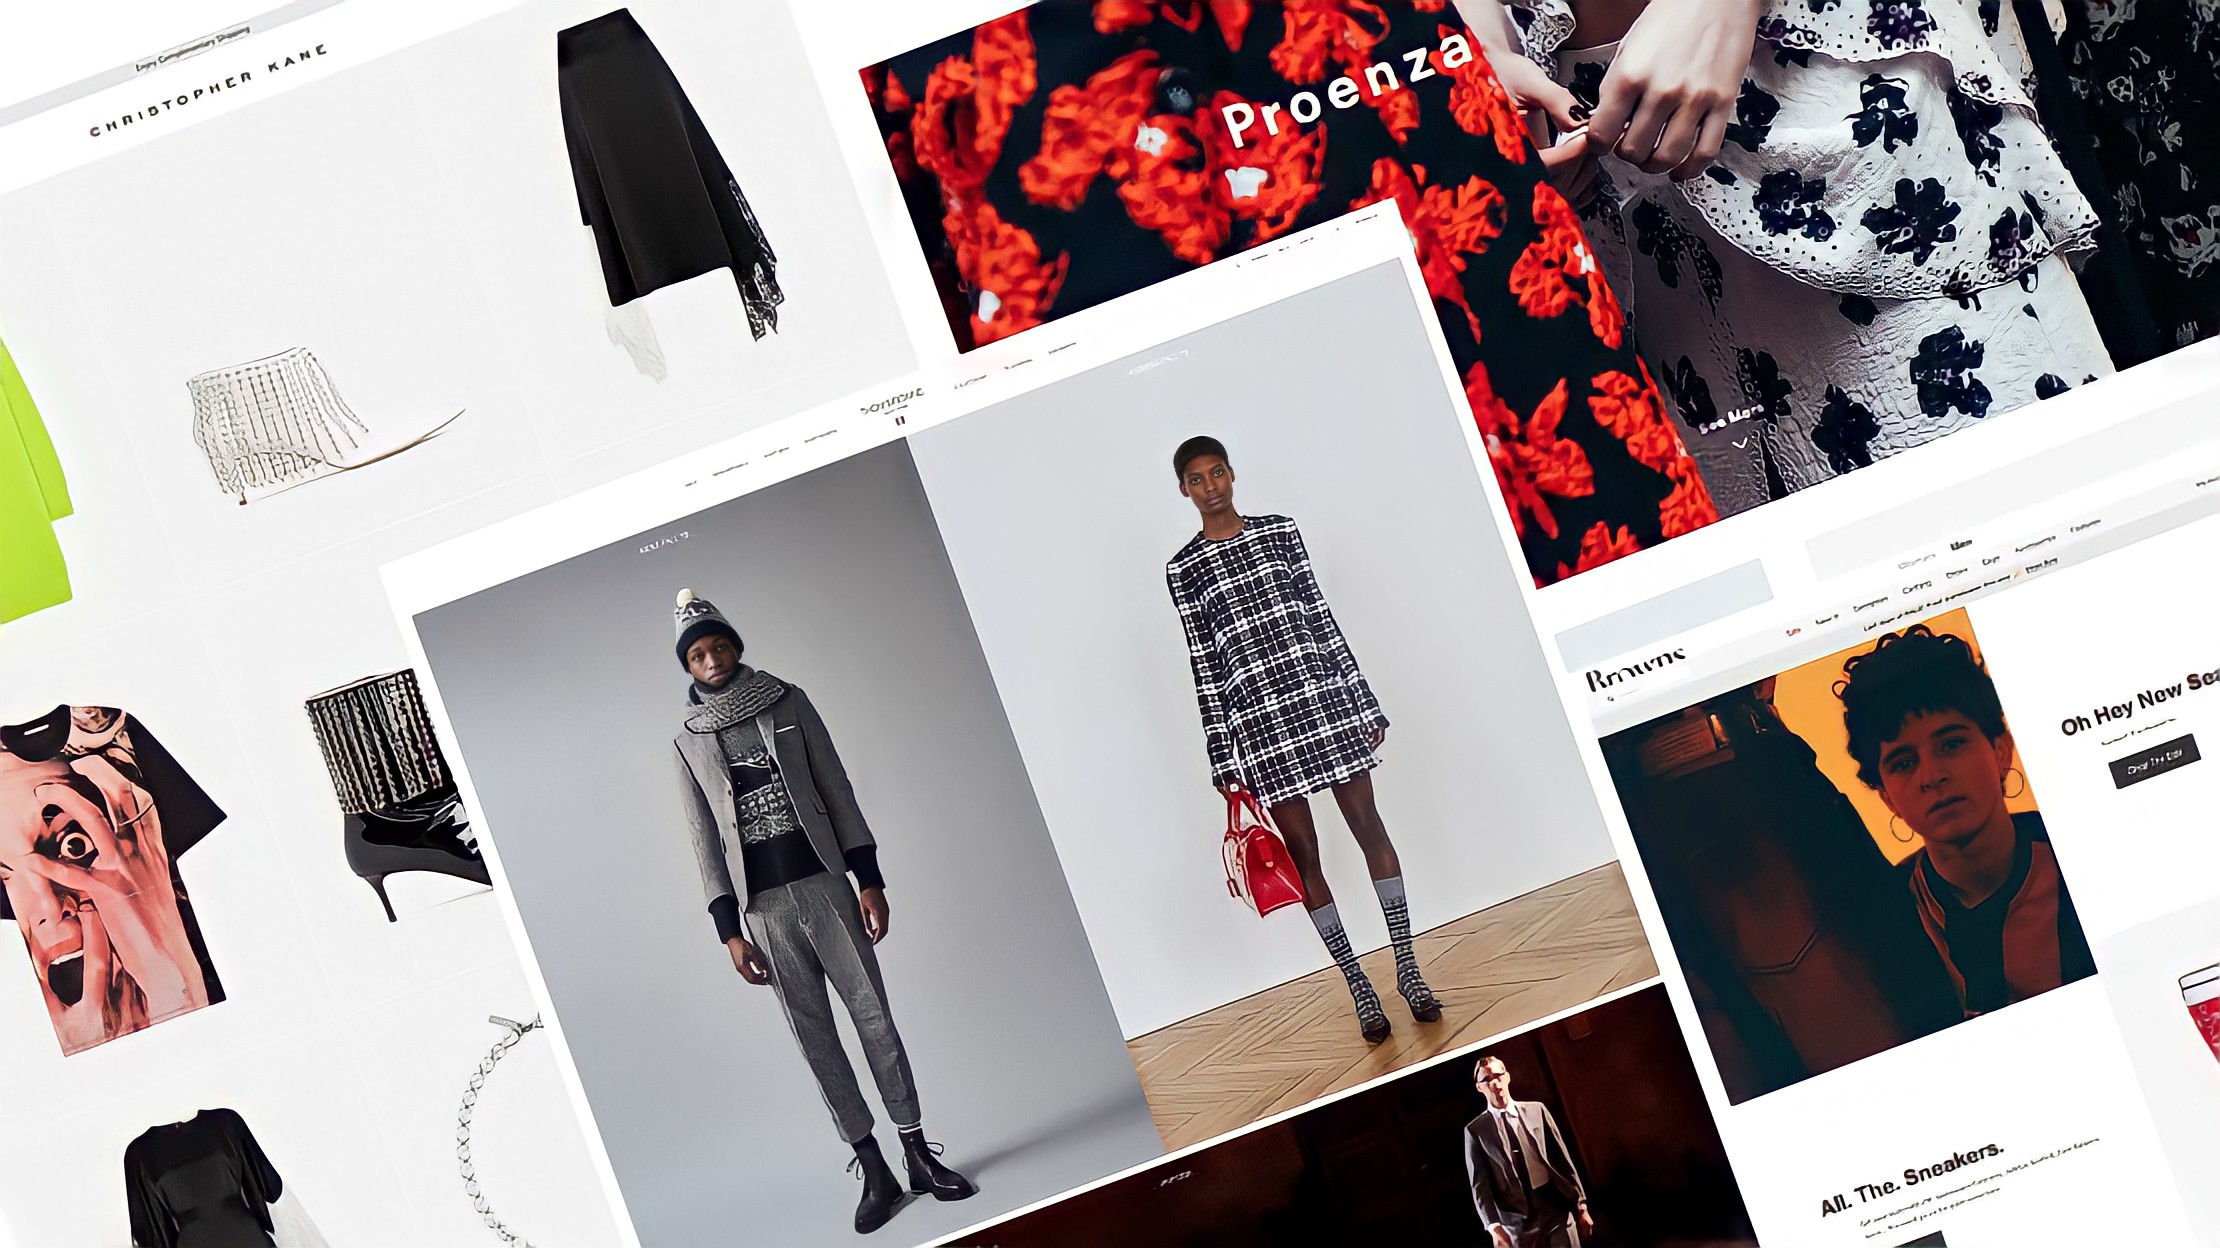 Farfetch бренд одежда ритейл магази онлайн купить товары женскаяодежда